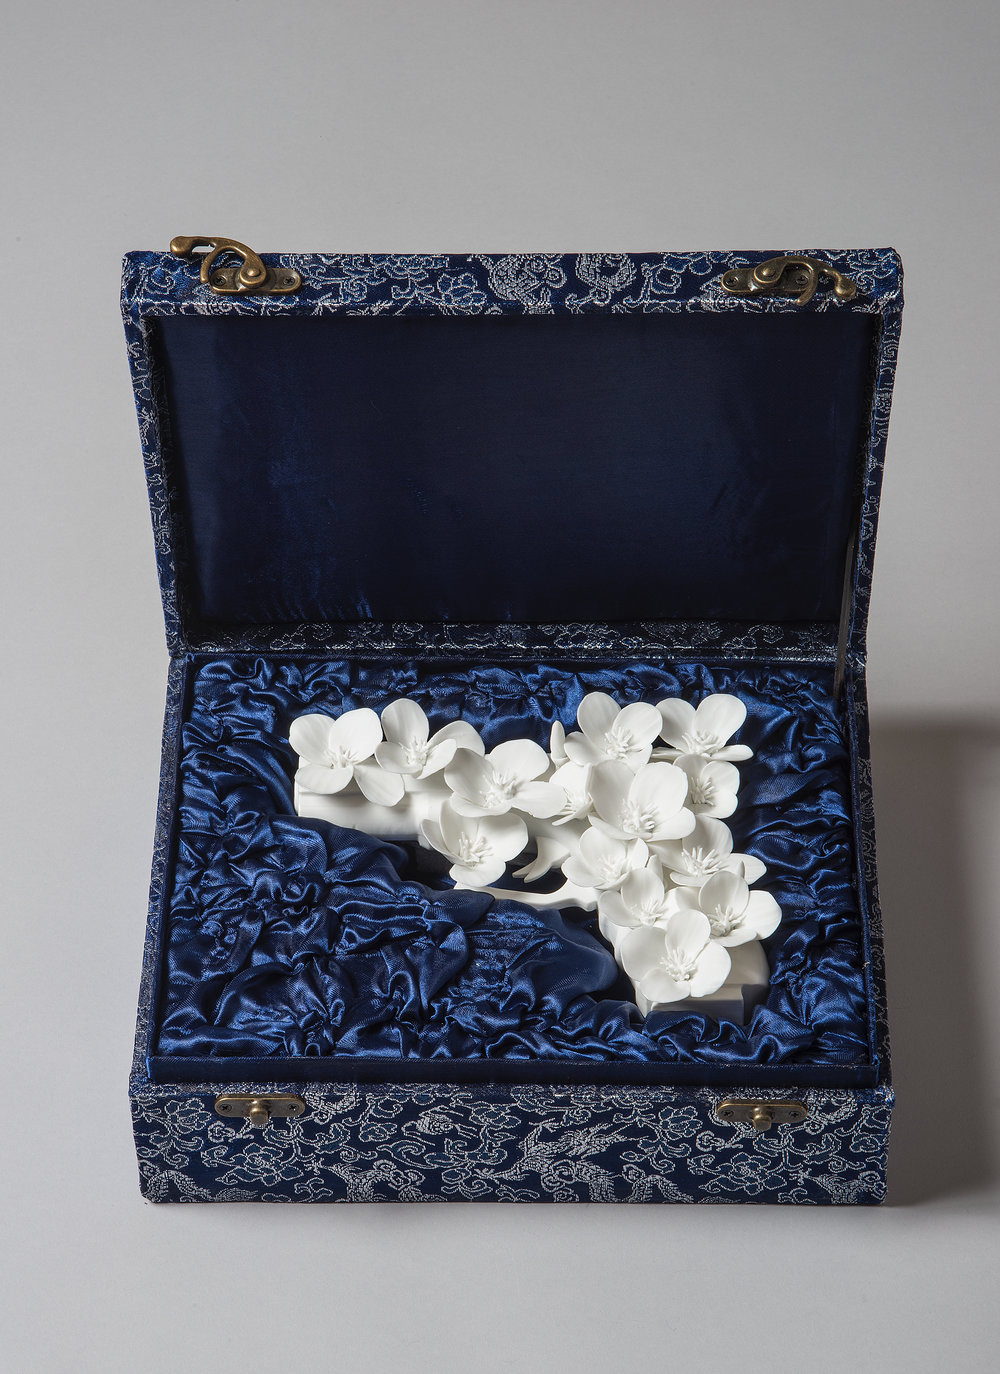 Keiko Fukazawa   Peacemaker 1202201514 (San Bernardino, California),  from the Peacemaker series, 2018  Porcelain, fabric box  12”W x 11”D x 7”